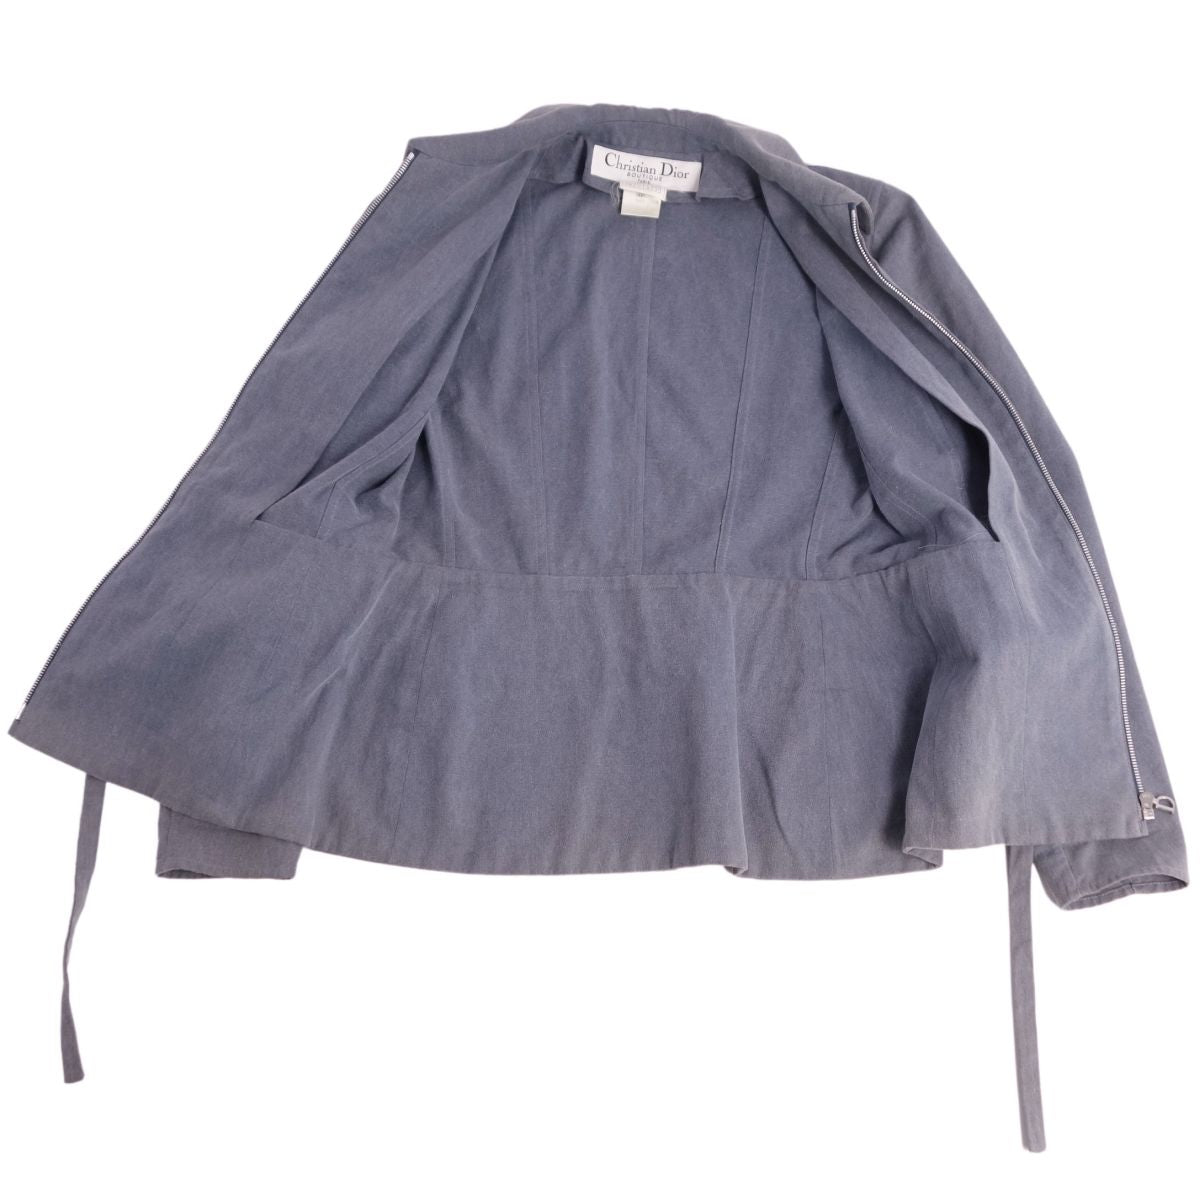 Vint Christian Dior Jacket Bronze Zip Up Ribbon Cotton   F40 GB12 USA8 (M Equivalent) Gr